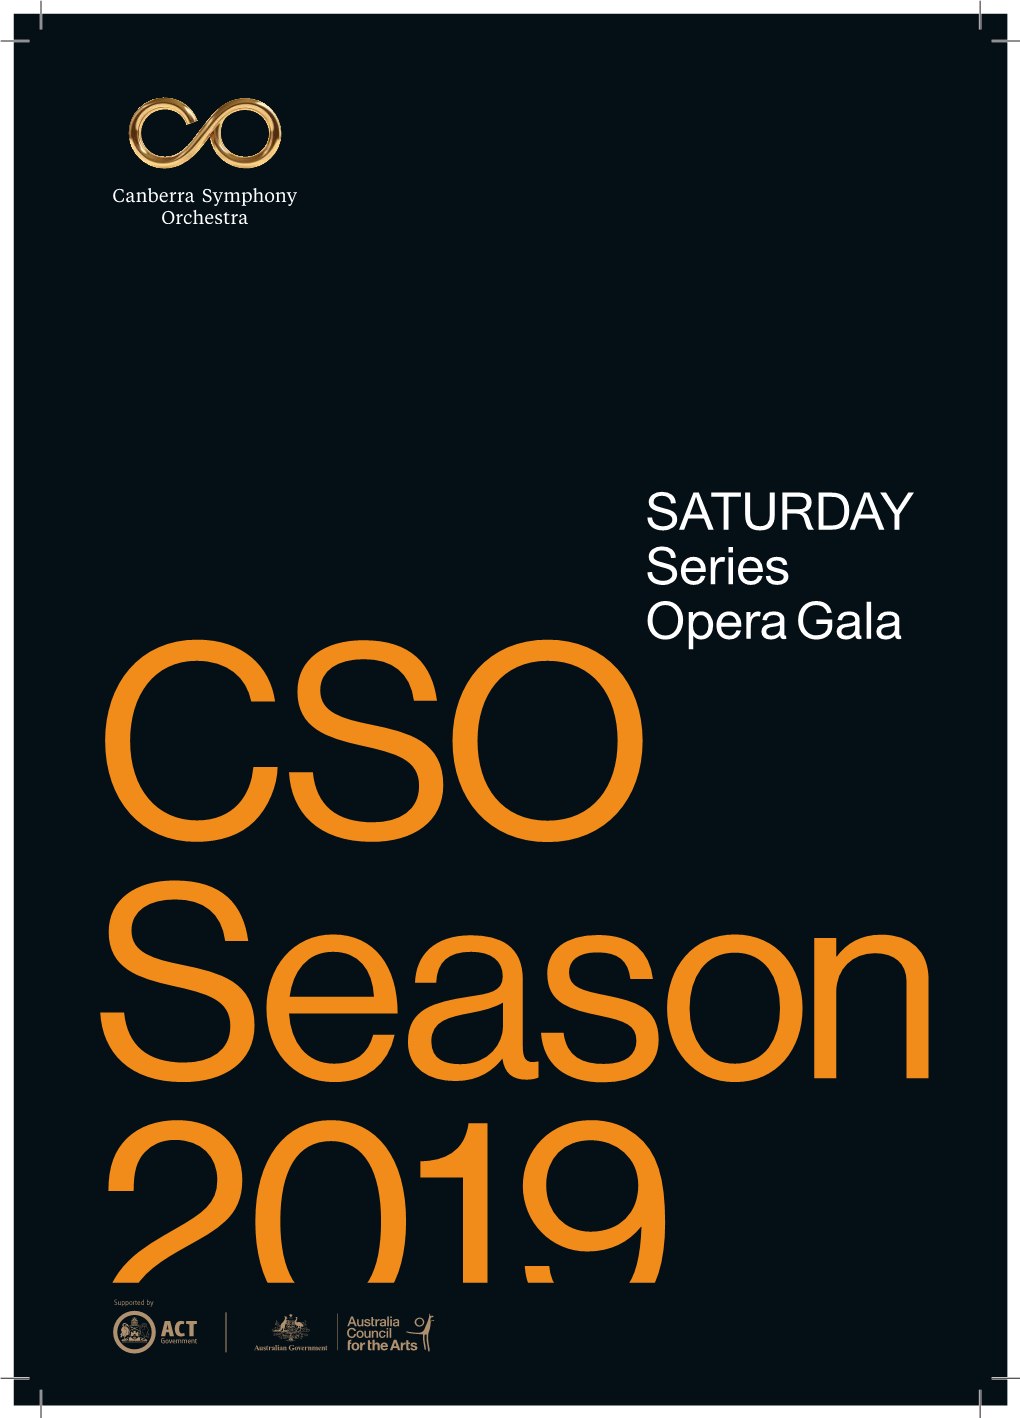 SATURDAY Series Opera Gala CSO Season 2019 Support the CSO’S 2019 Tax Appeal